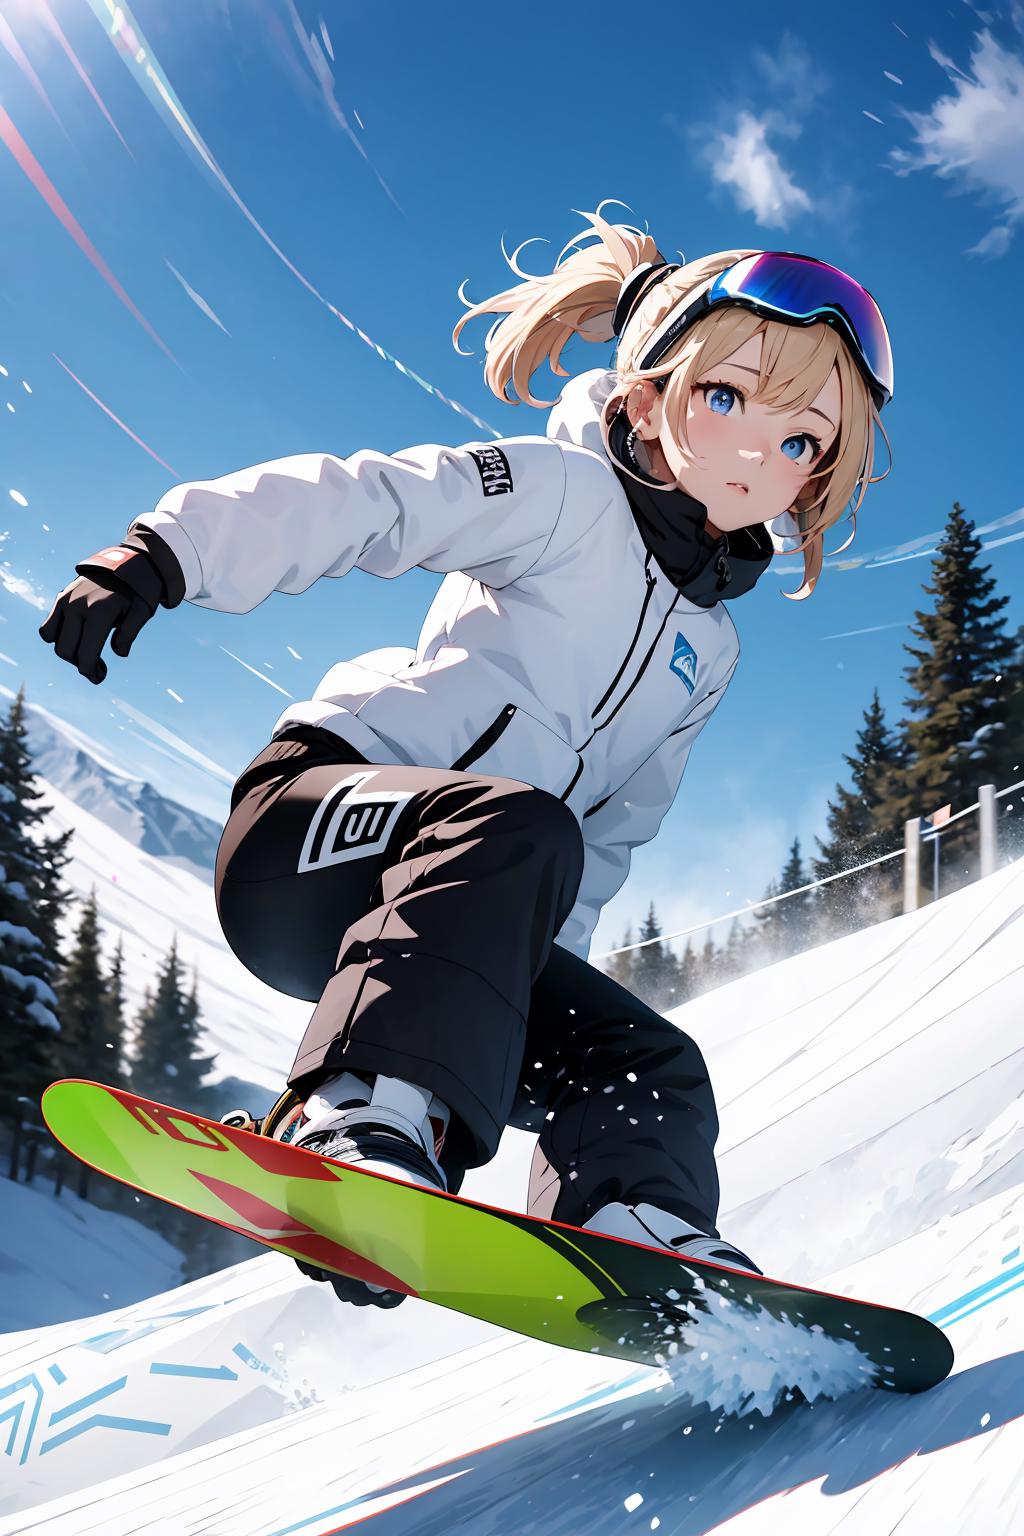 Snowboard | page 2 of 8 - Zerochan Anime Image Board